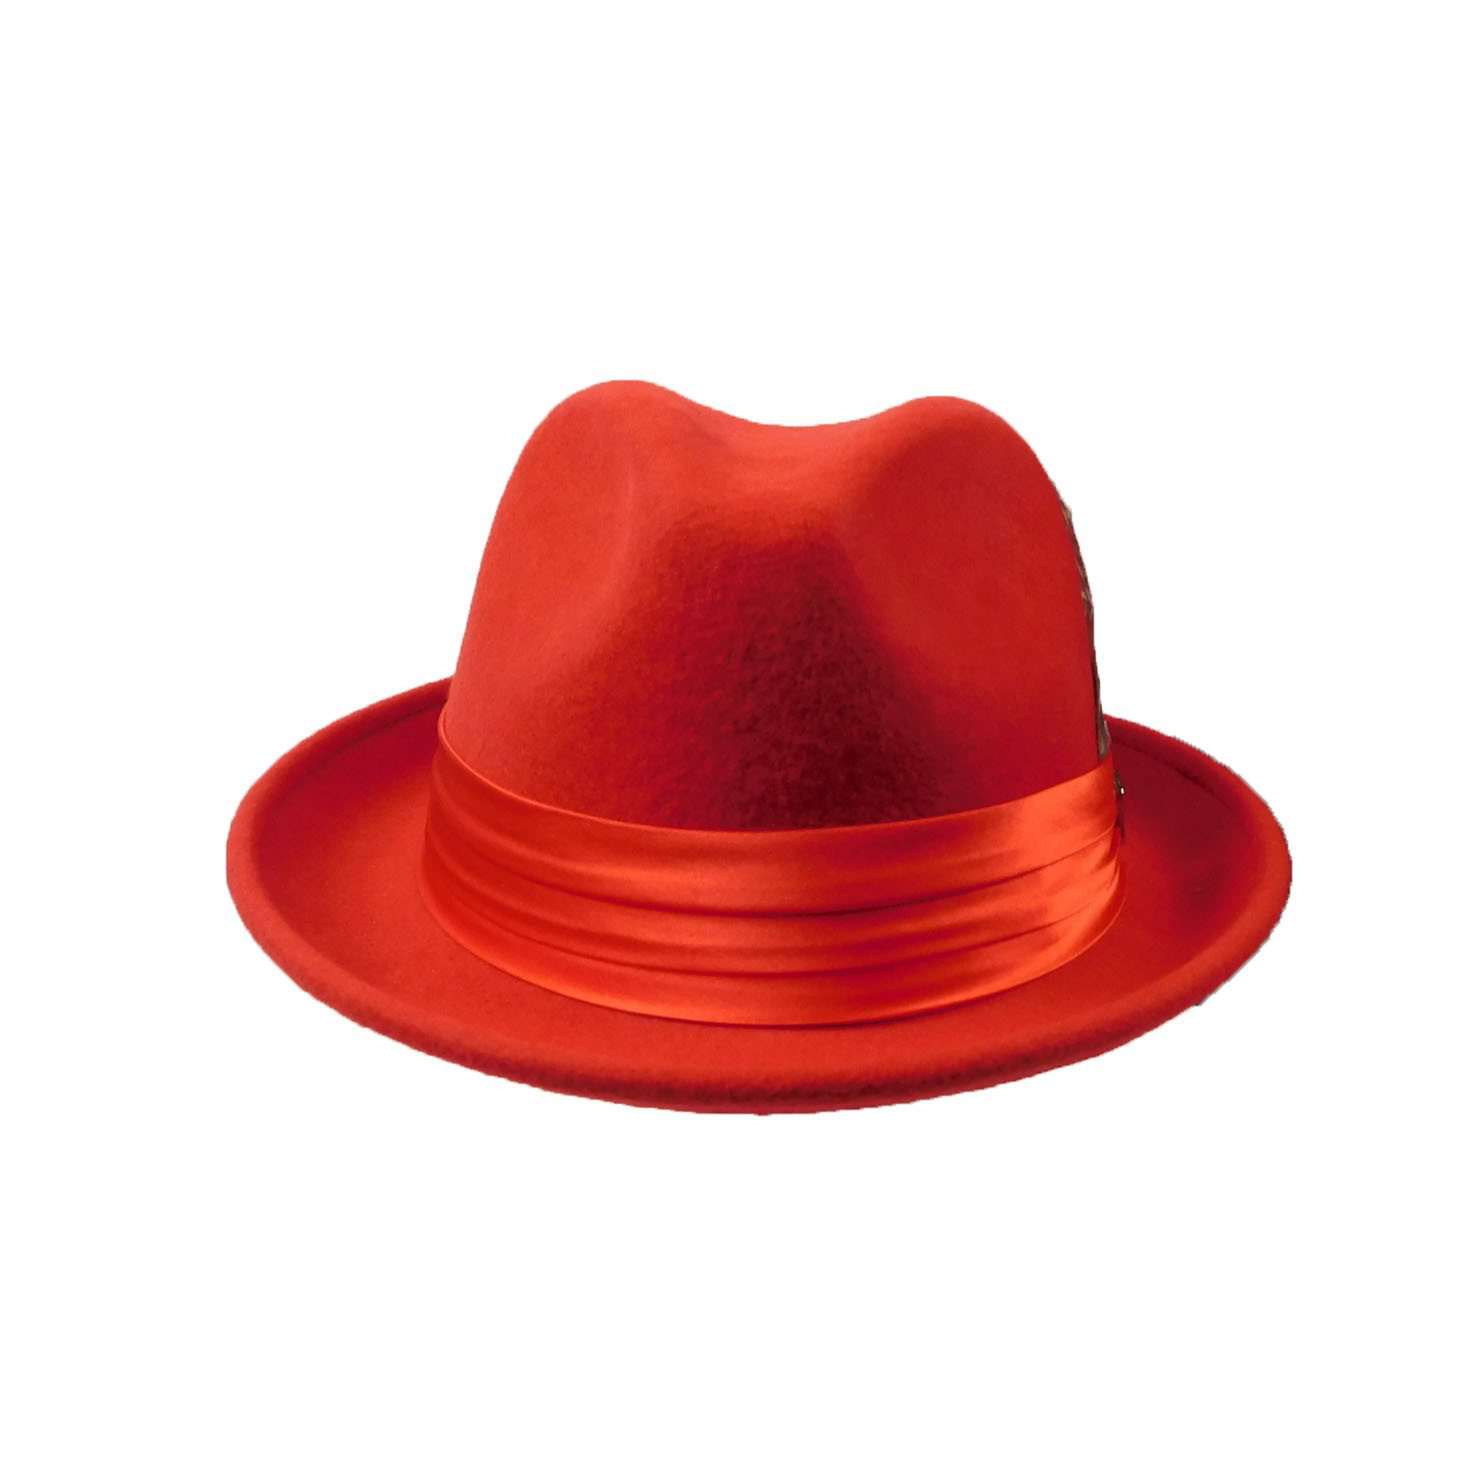 Stacy Adams Snap Brim Fedora Hat - Red Fedora Hat Stacy Adams Hats    